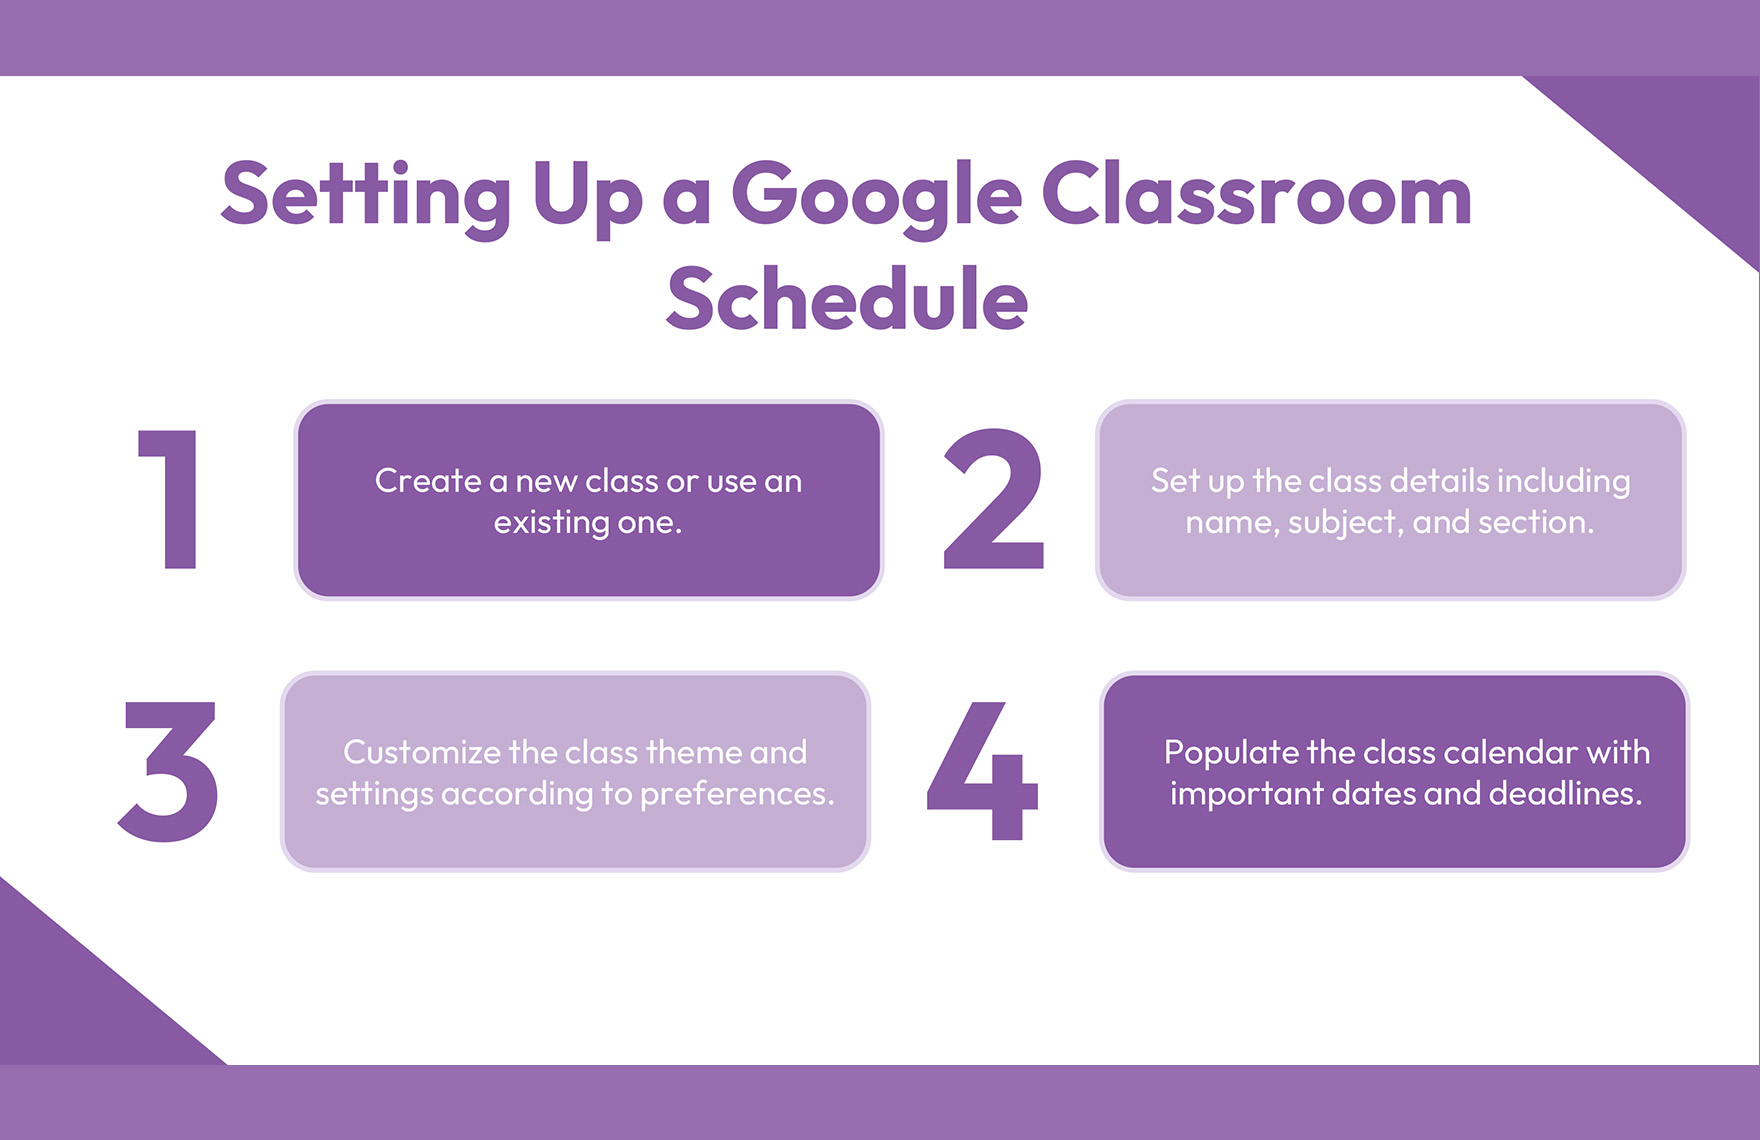 Google Classroom Schedule Template